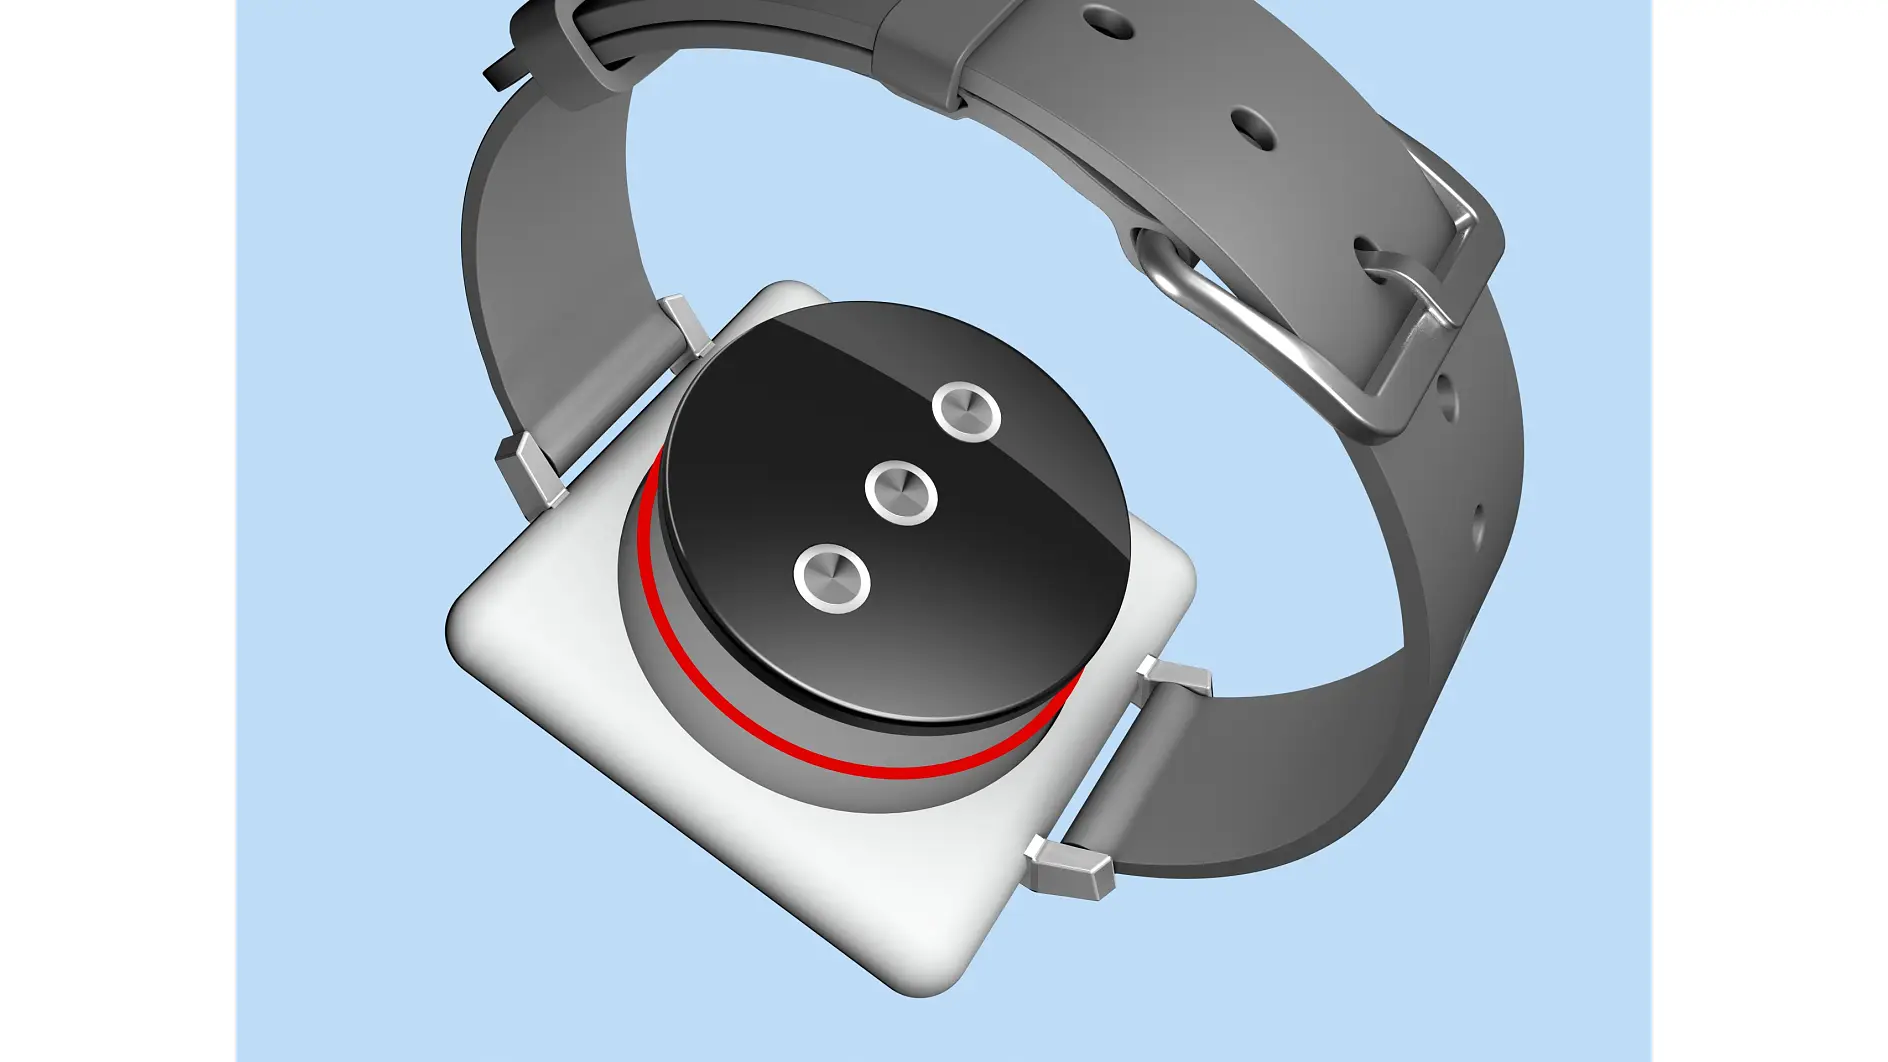 tesa-electronics-smartwatch-back-cover-mounting-001b-illustration